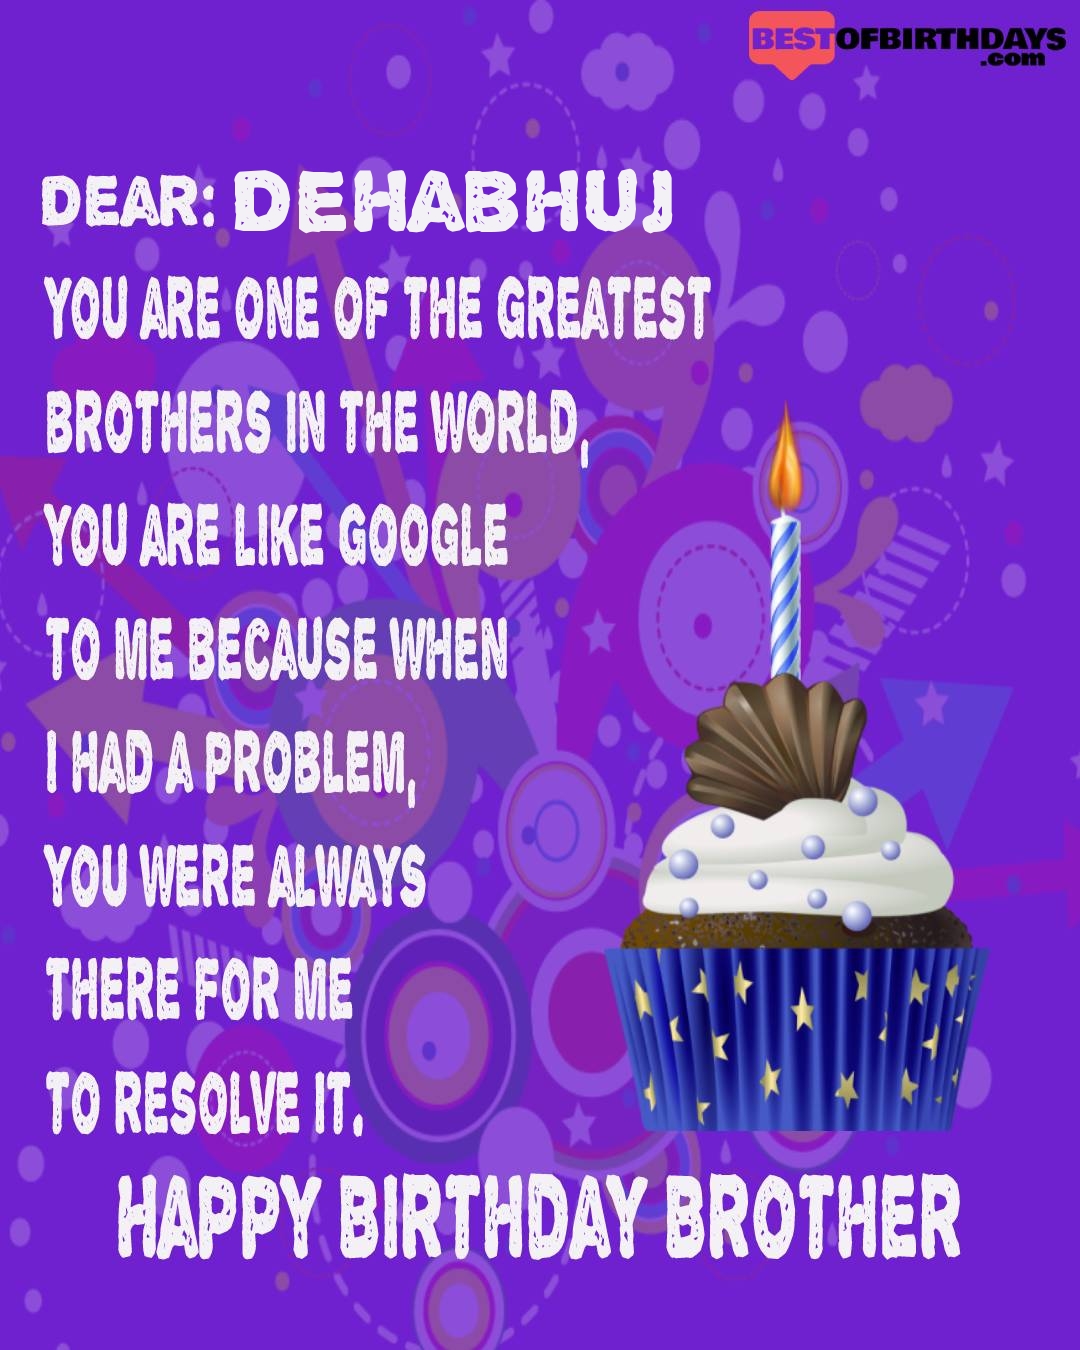 Happy birthday dehabhuj bhai brother bro